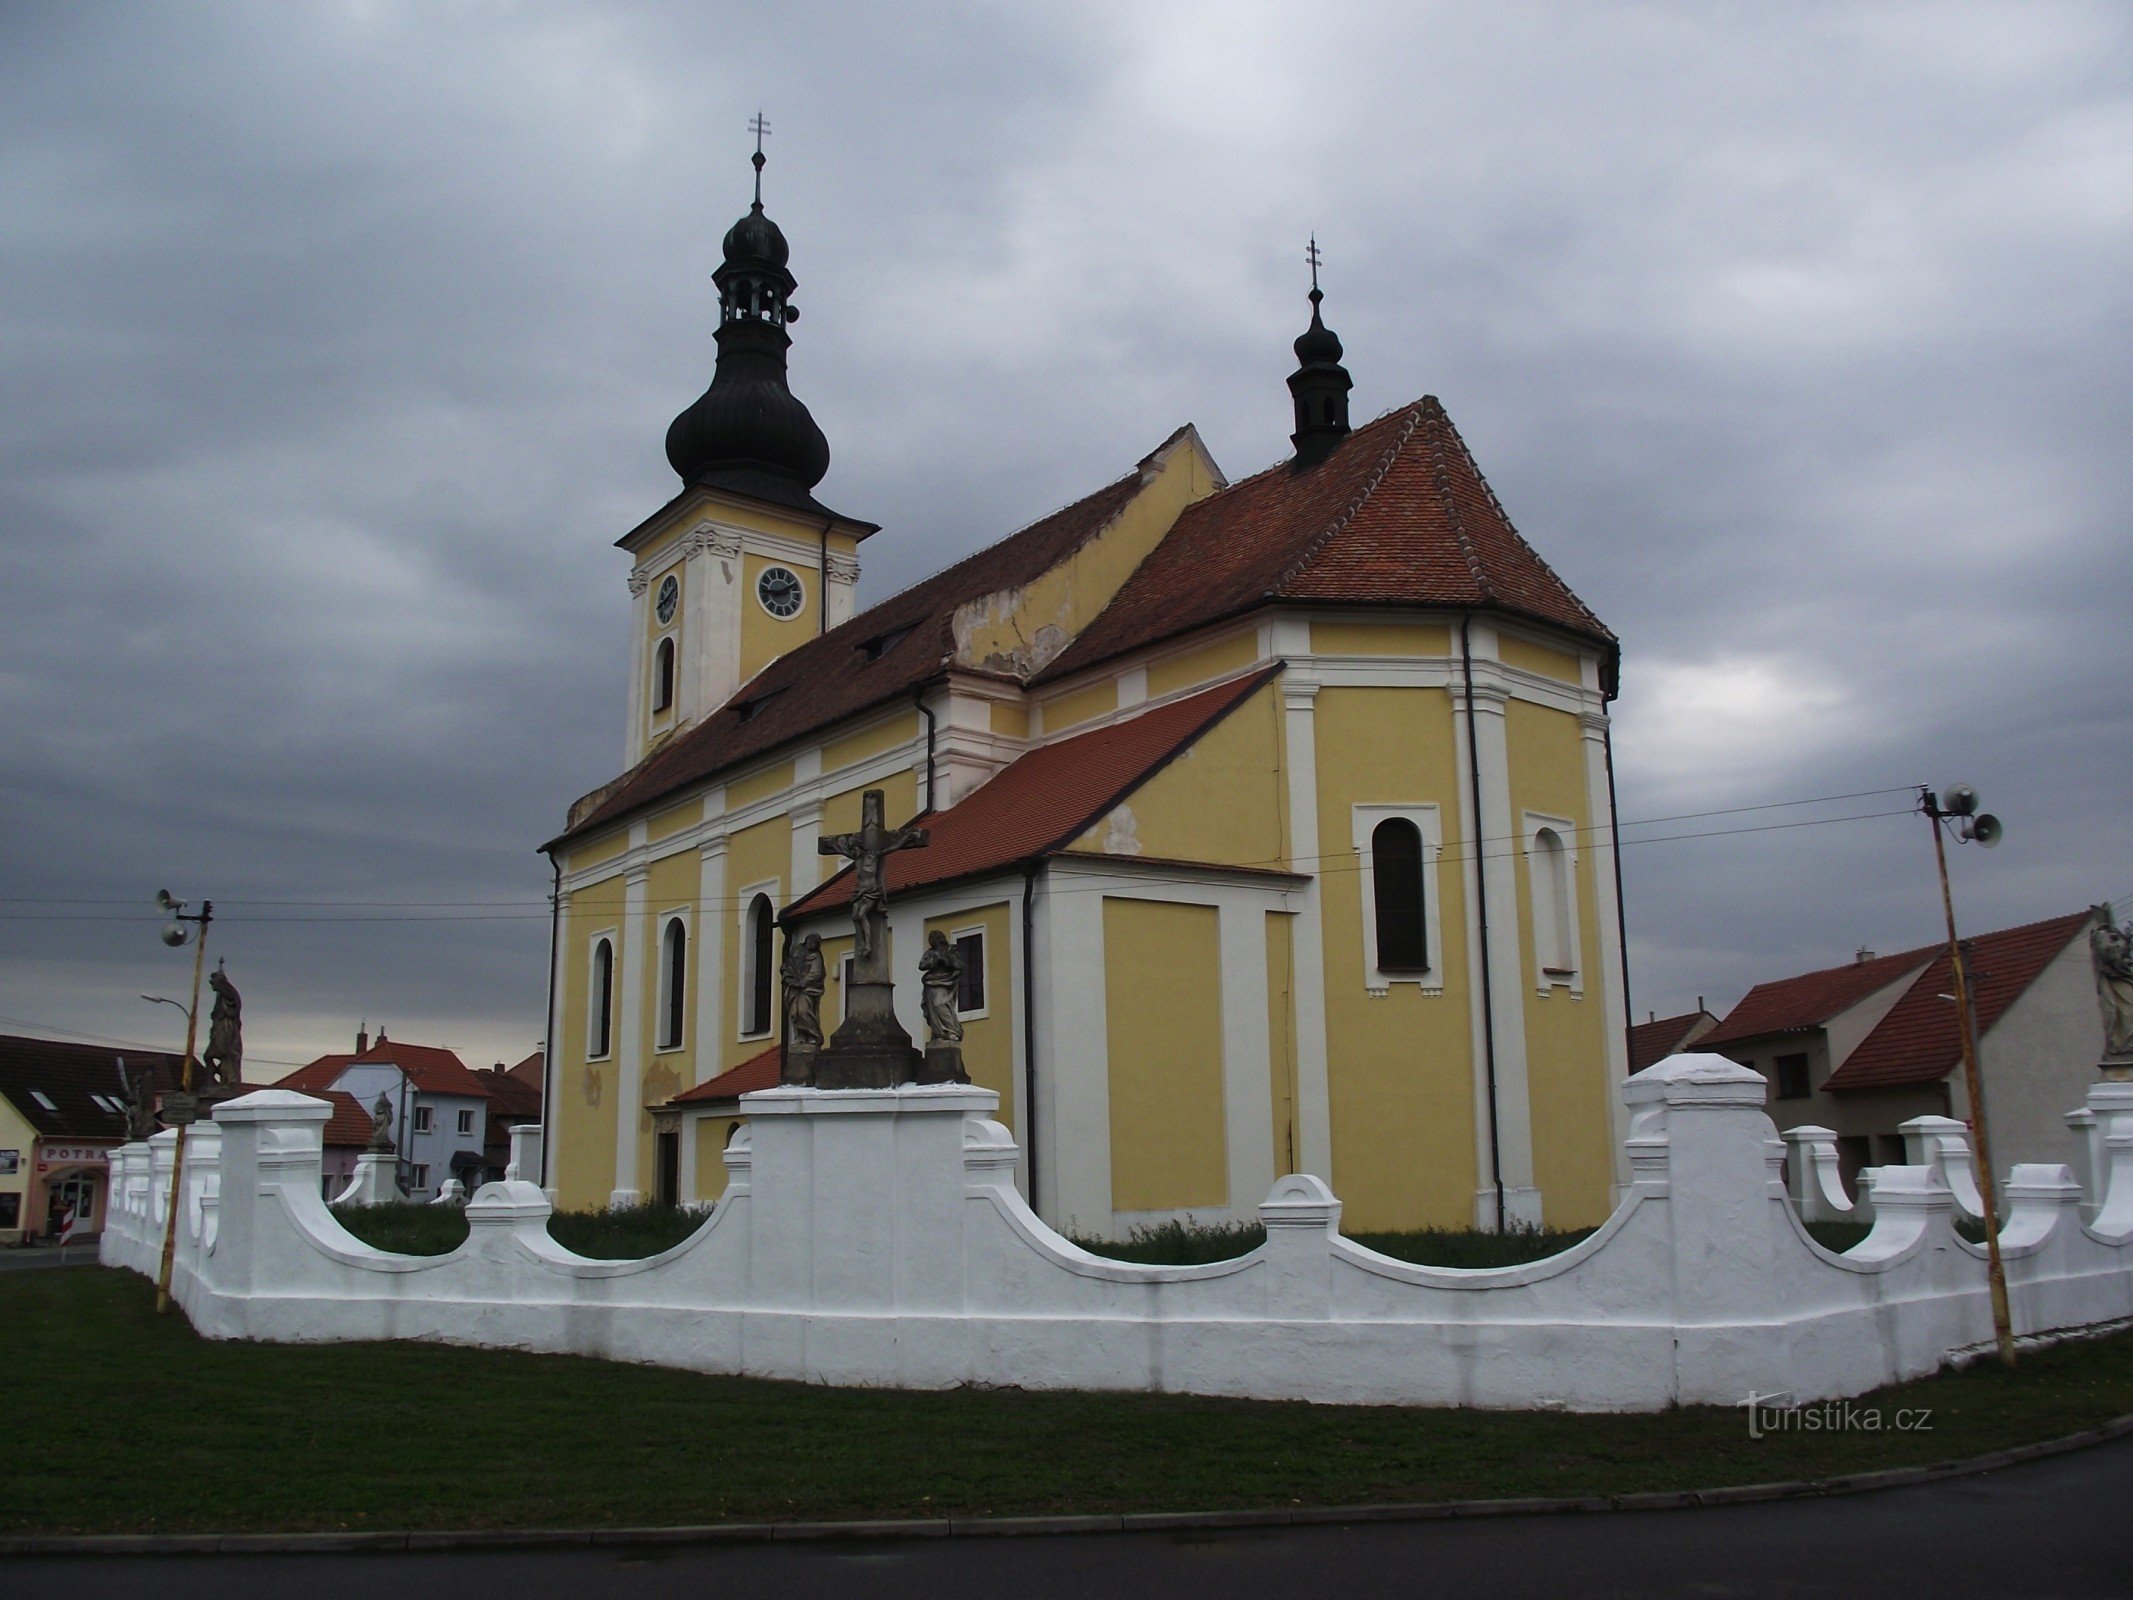 Мілотіце - церква Всіх Святих і скульптурна галерея на стіні